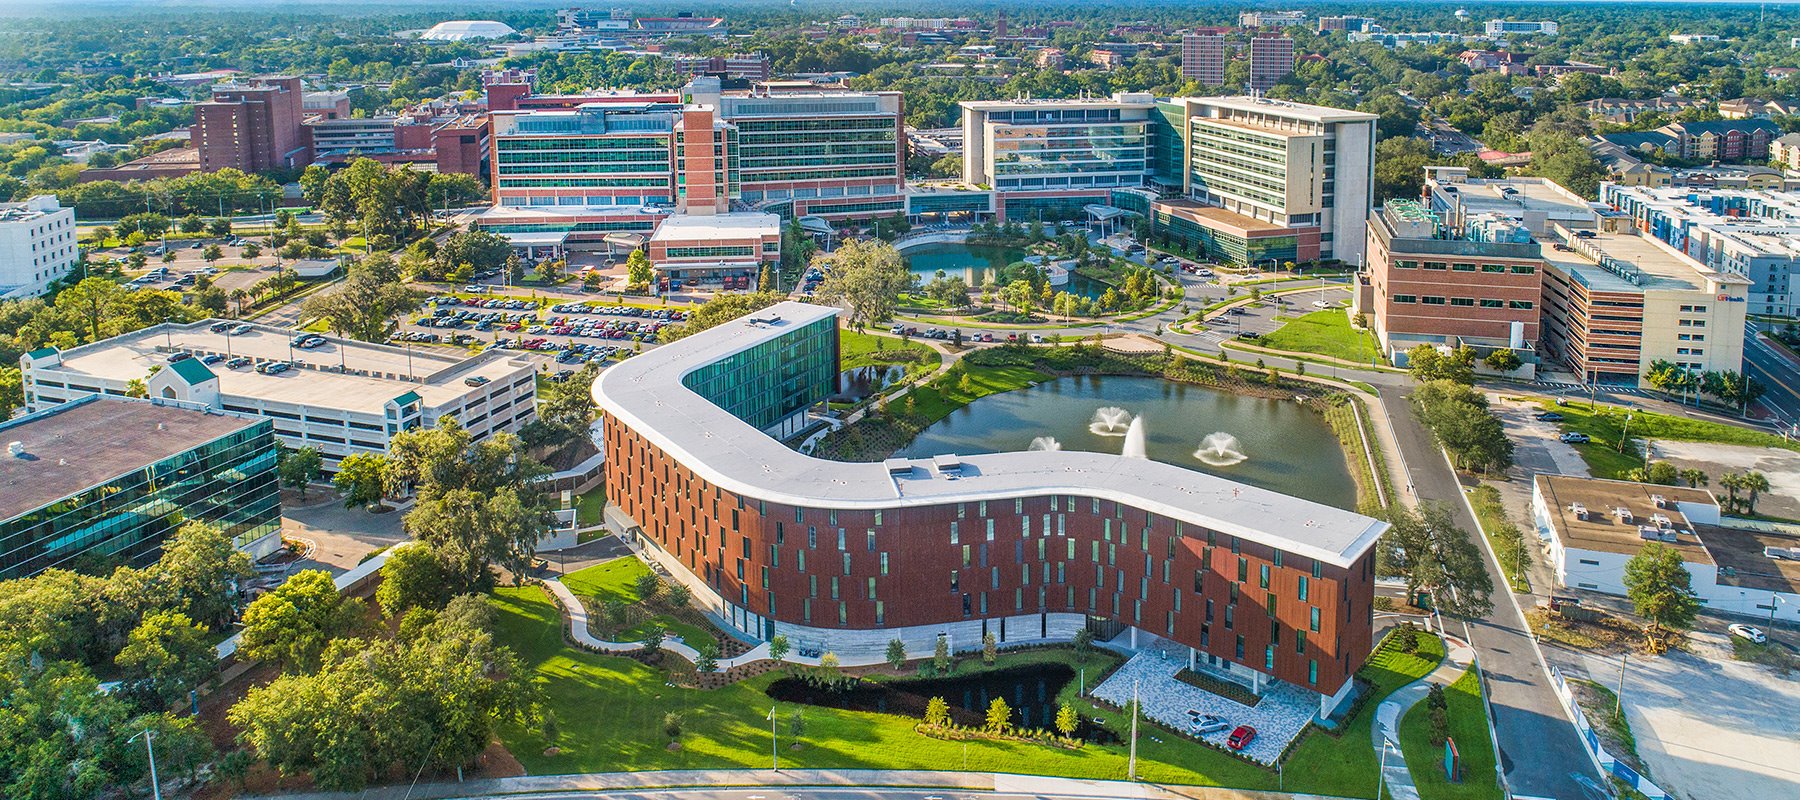 Location of Hotel ELEO at the University of Florida